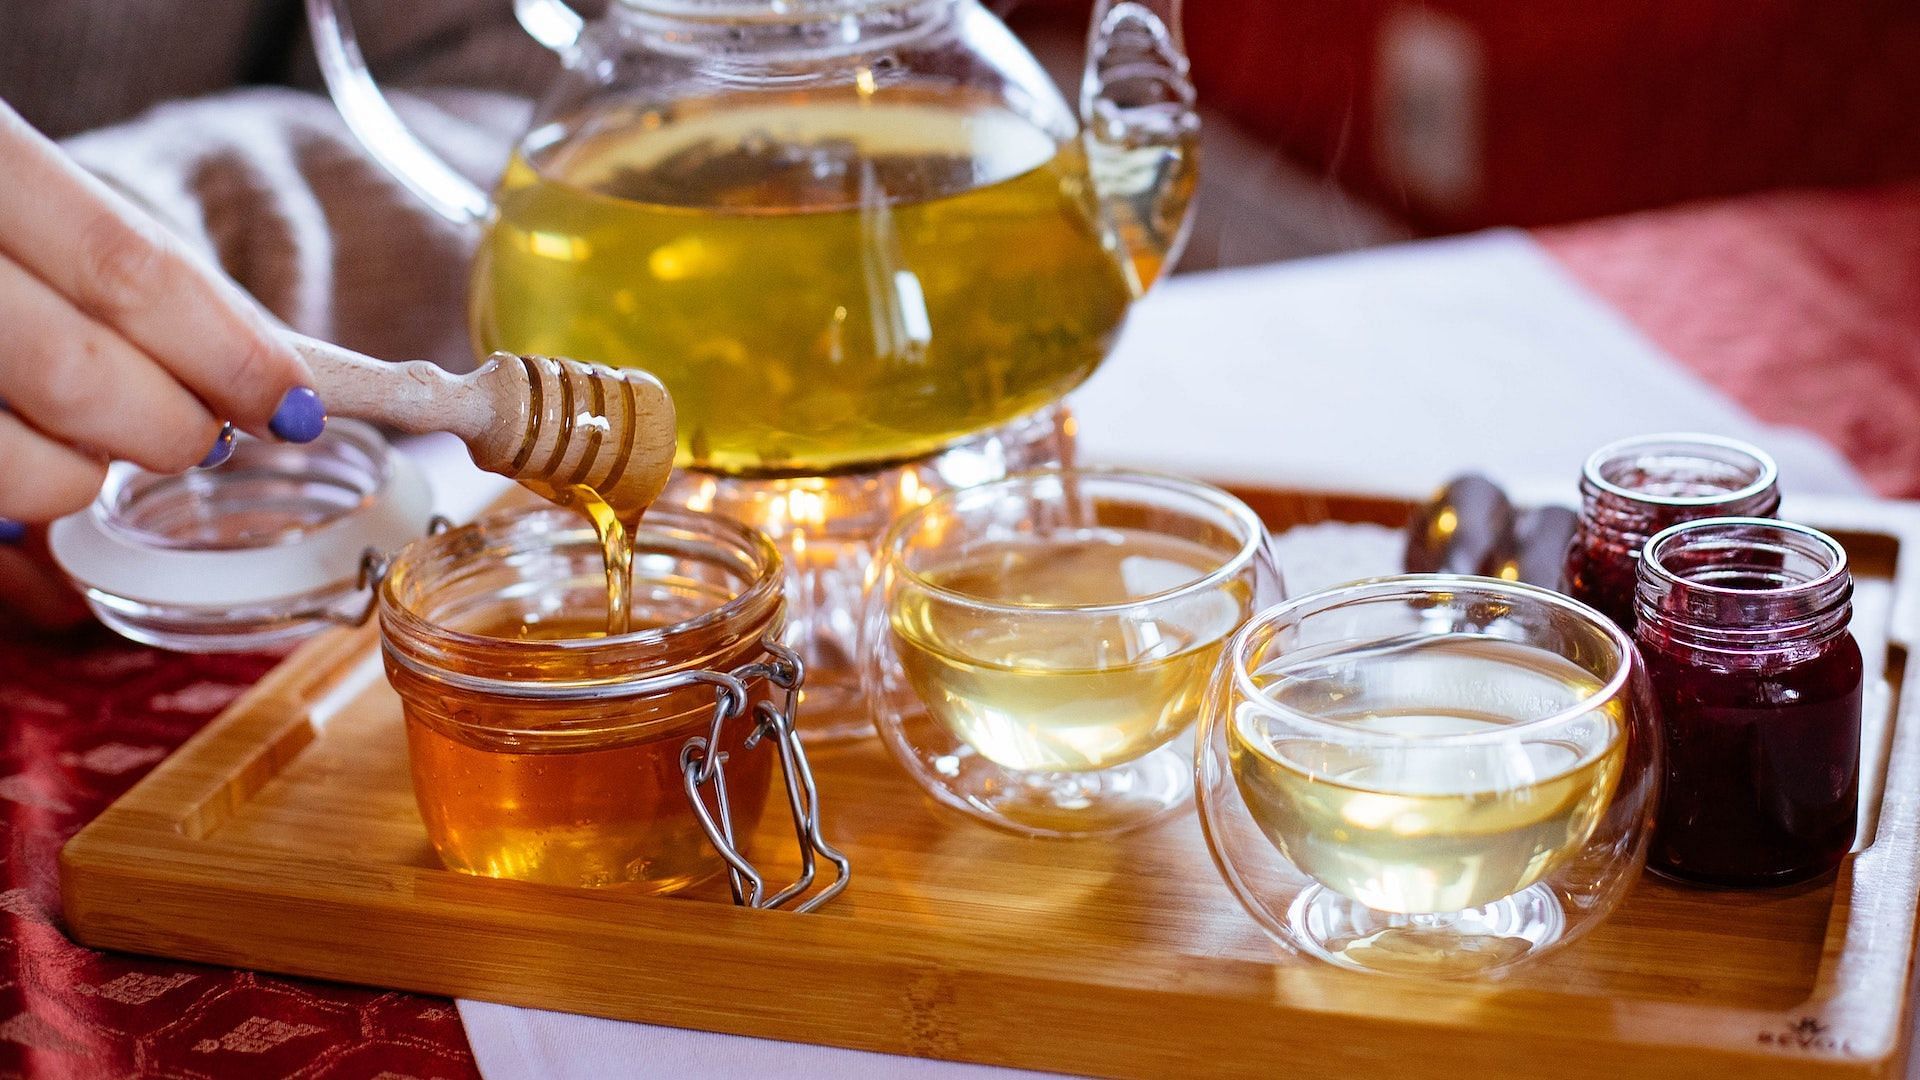 Honey is used to treat sore throats. Image via Pexels/Valeria Boltneva